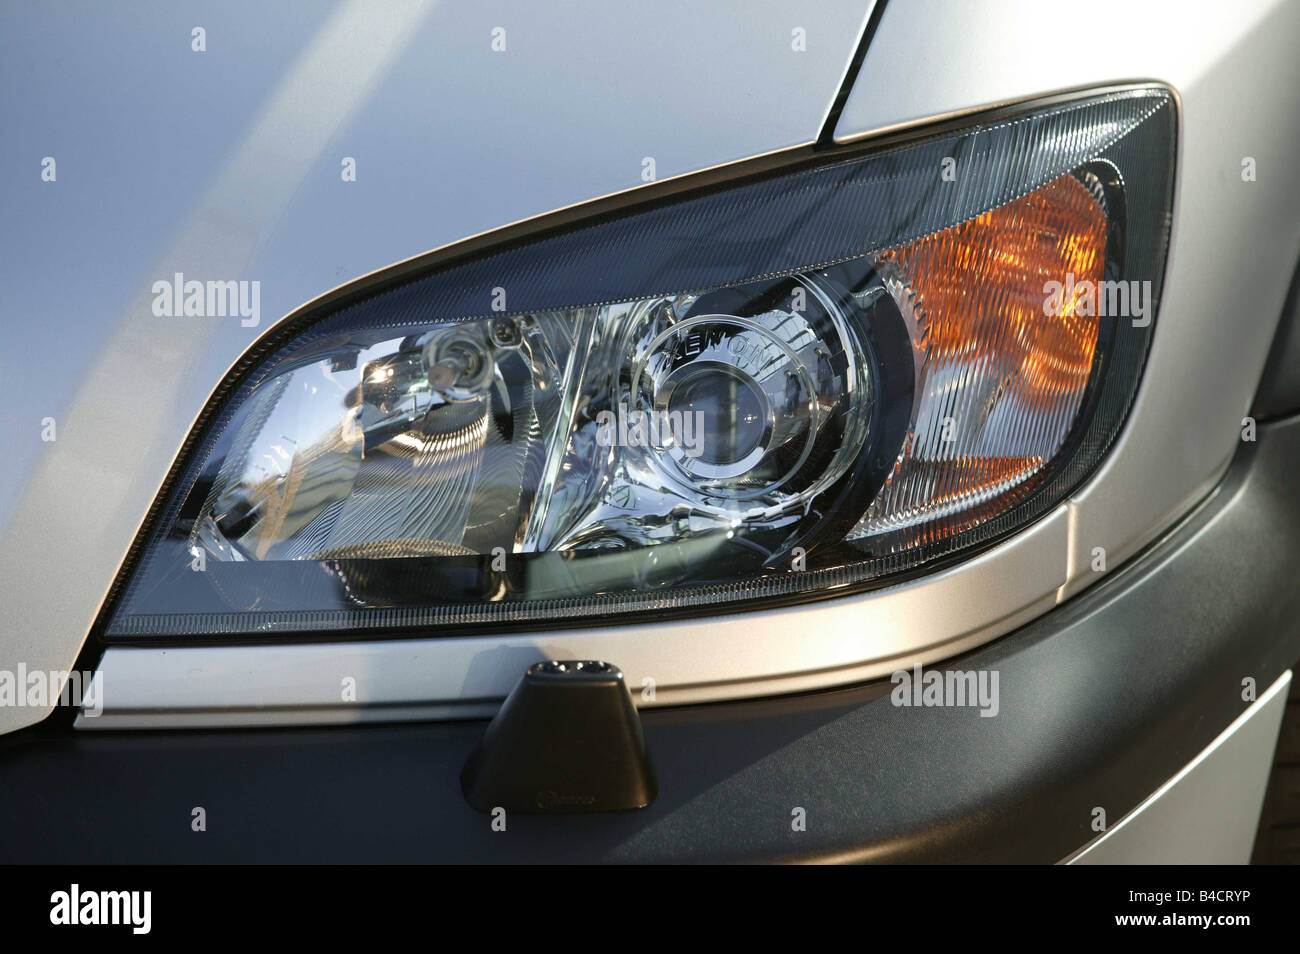 Opel zafira 2 2 dti hi-res stock photography and -